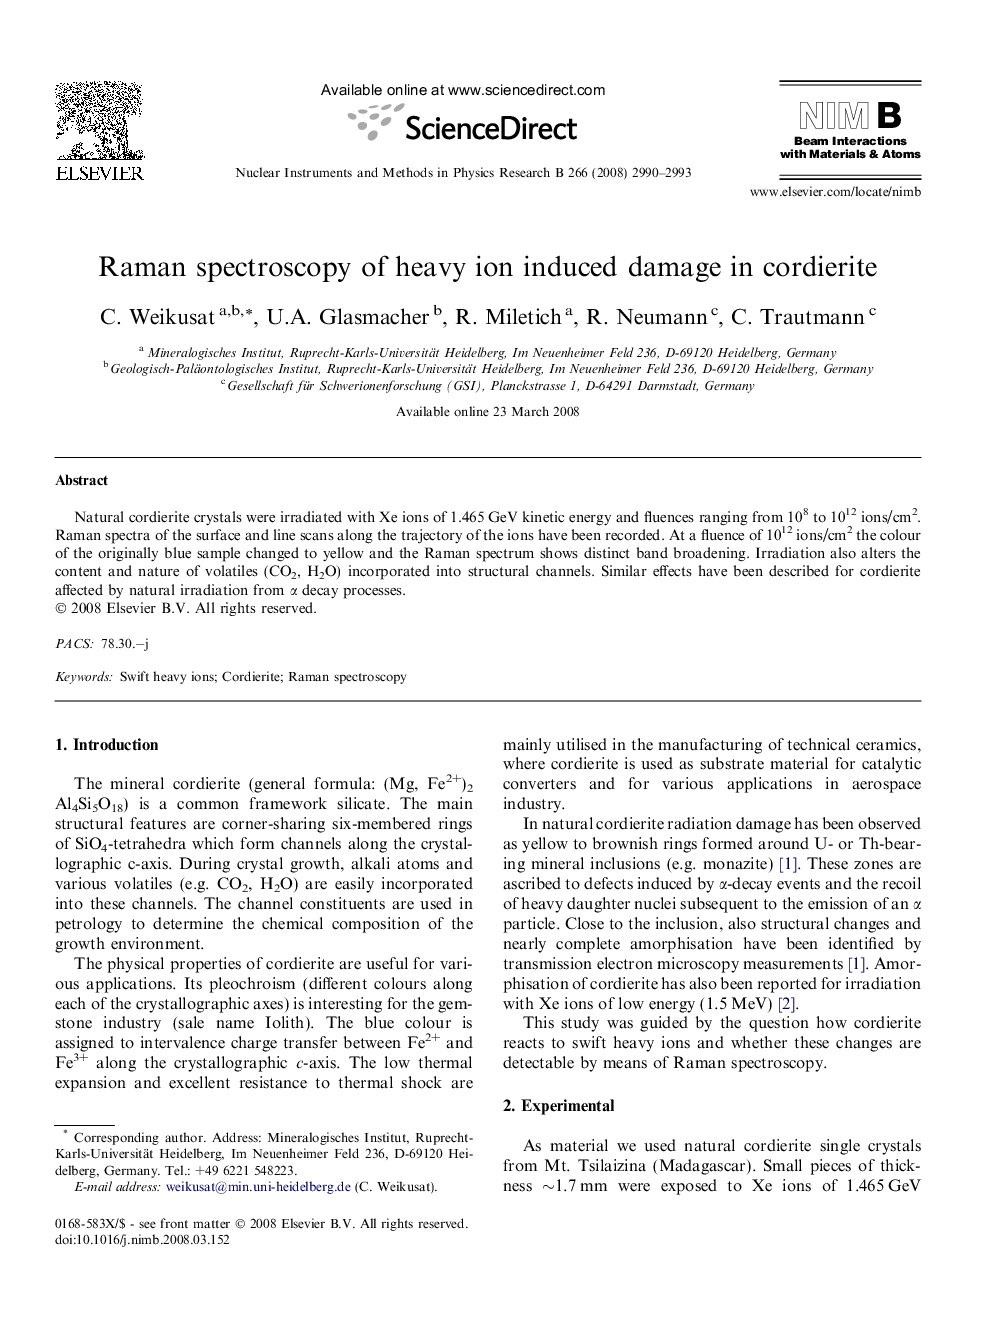 Raman spectroscopy of heavy ion induced damage in cordierite